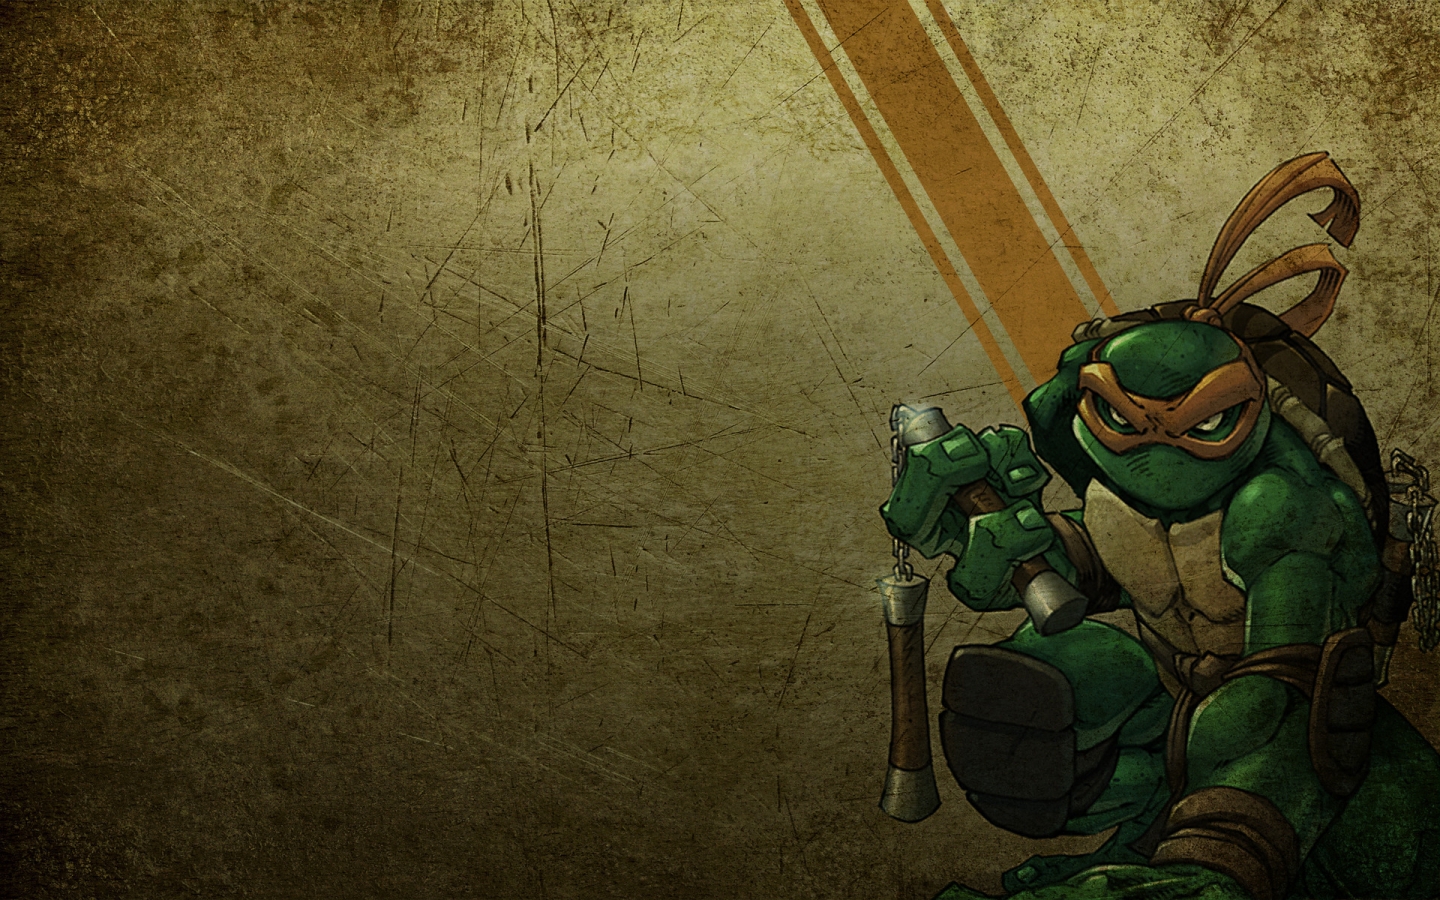 Mutant Ninja Turtles for 1440 x 900 widescreen resolution